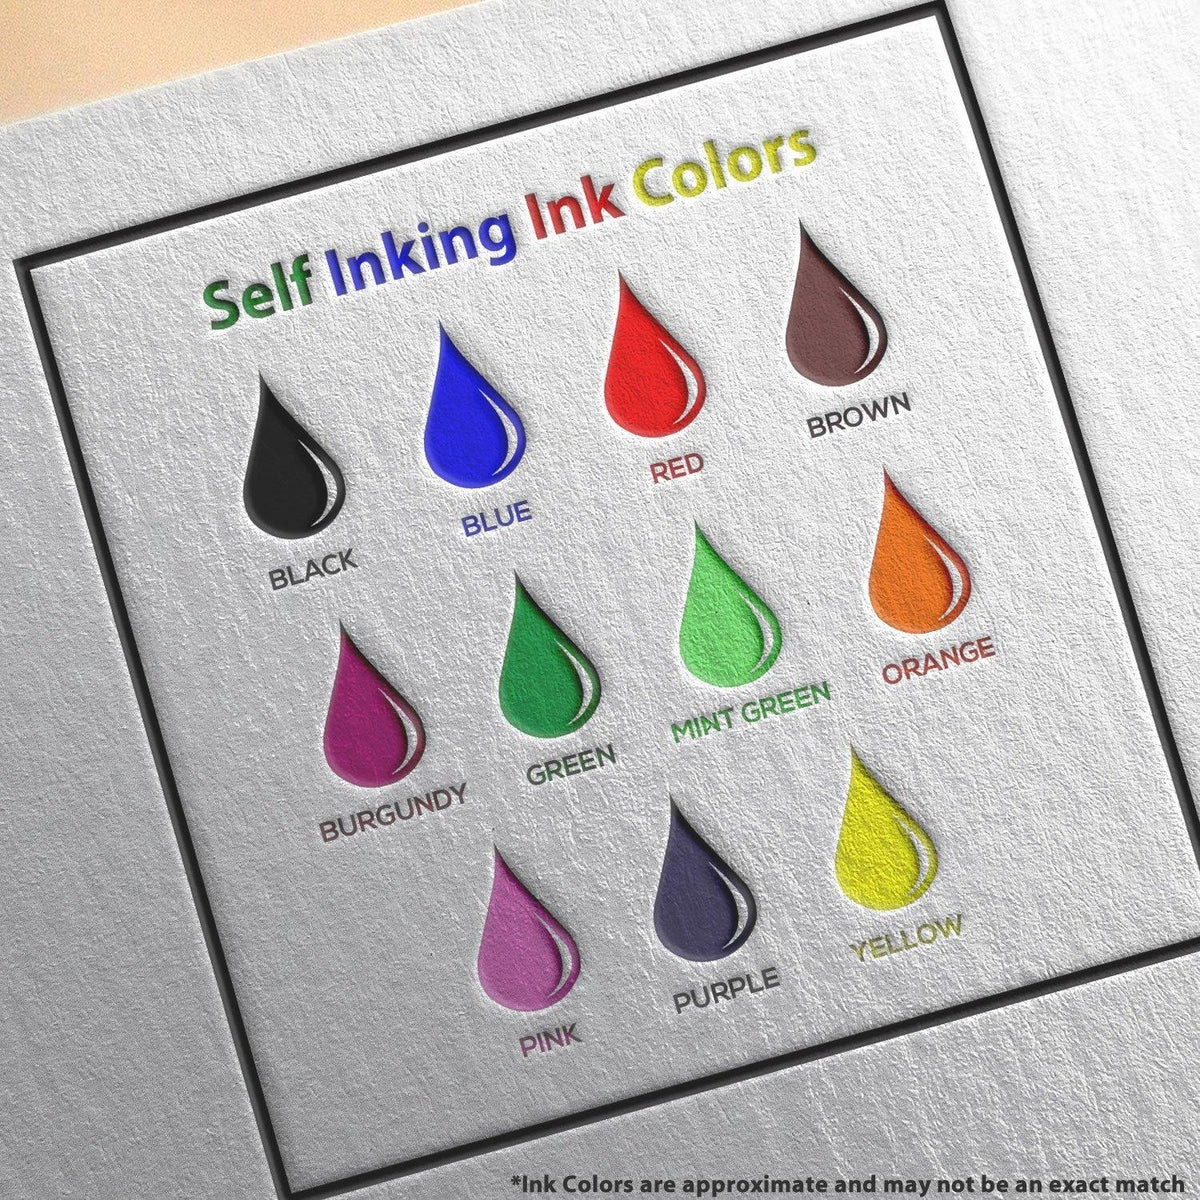 Self Inking Super Homework Stamp - Engineer Seal Stamps - Brand_Trodat, Impression Size_Small, Stamp Type_Self-Inking Stamp, Type of Use_Teacher